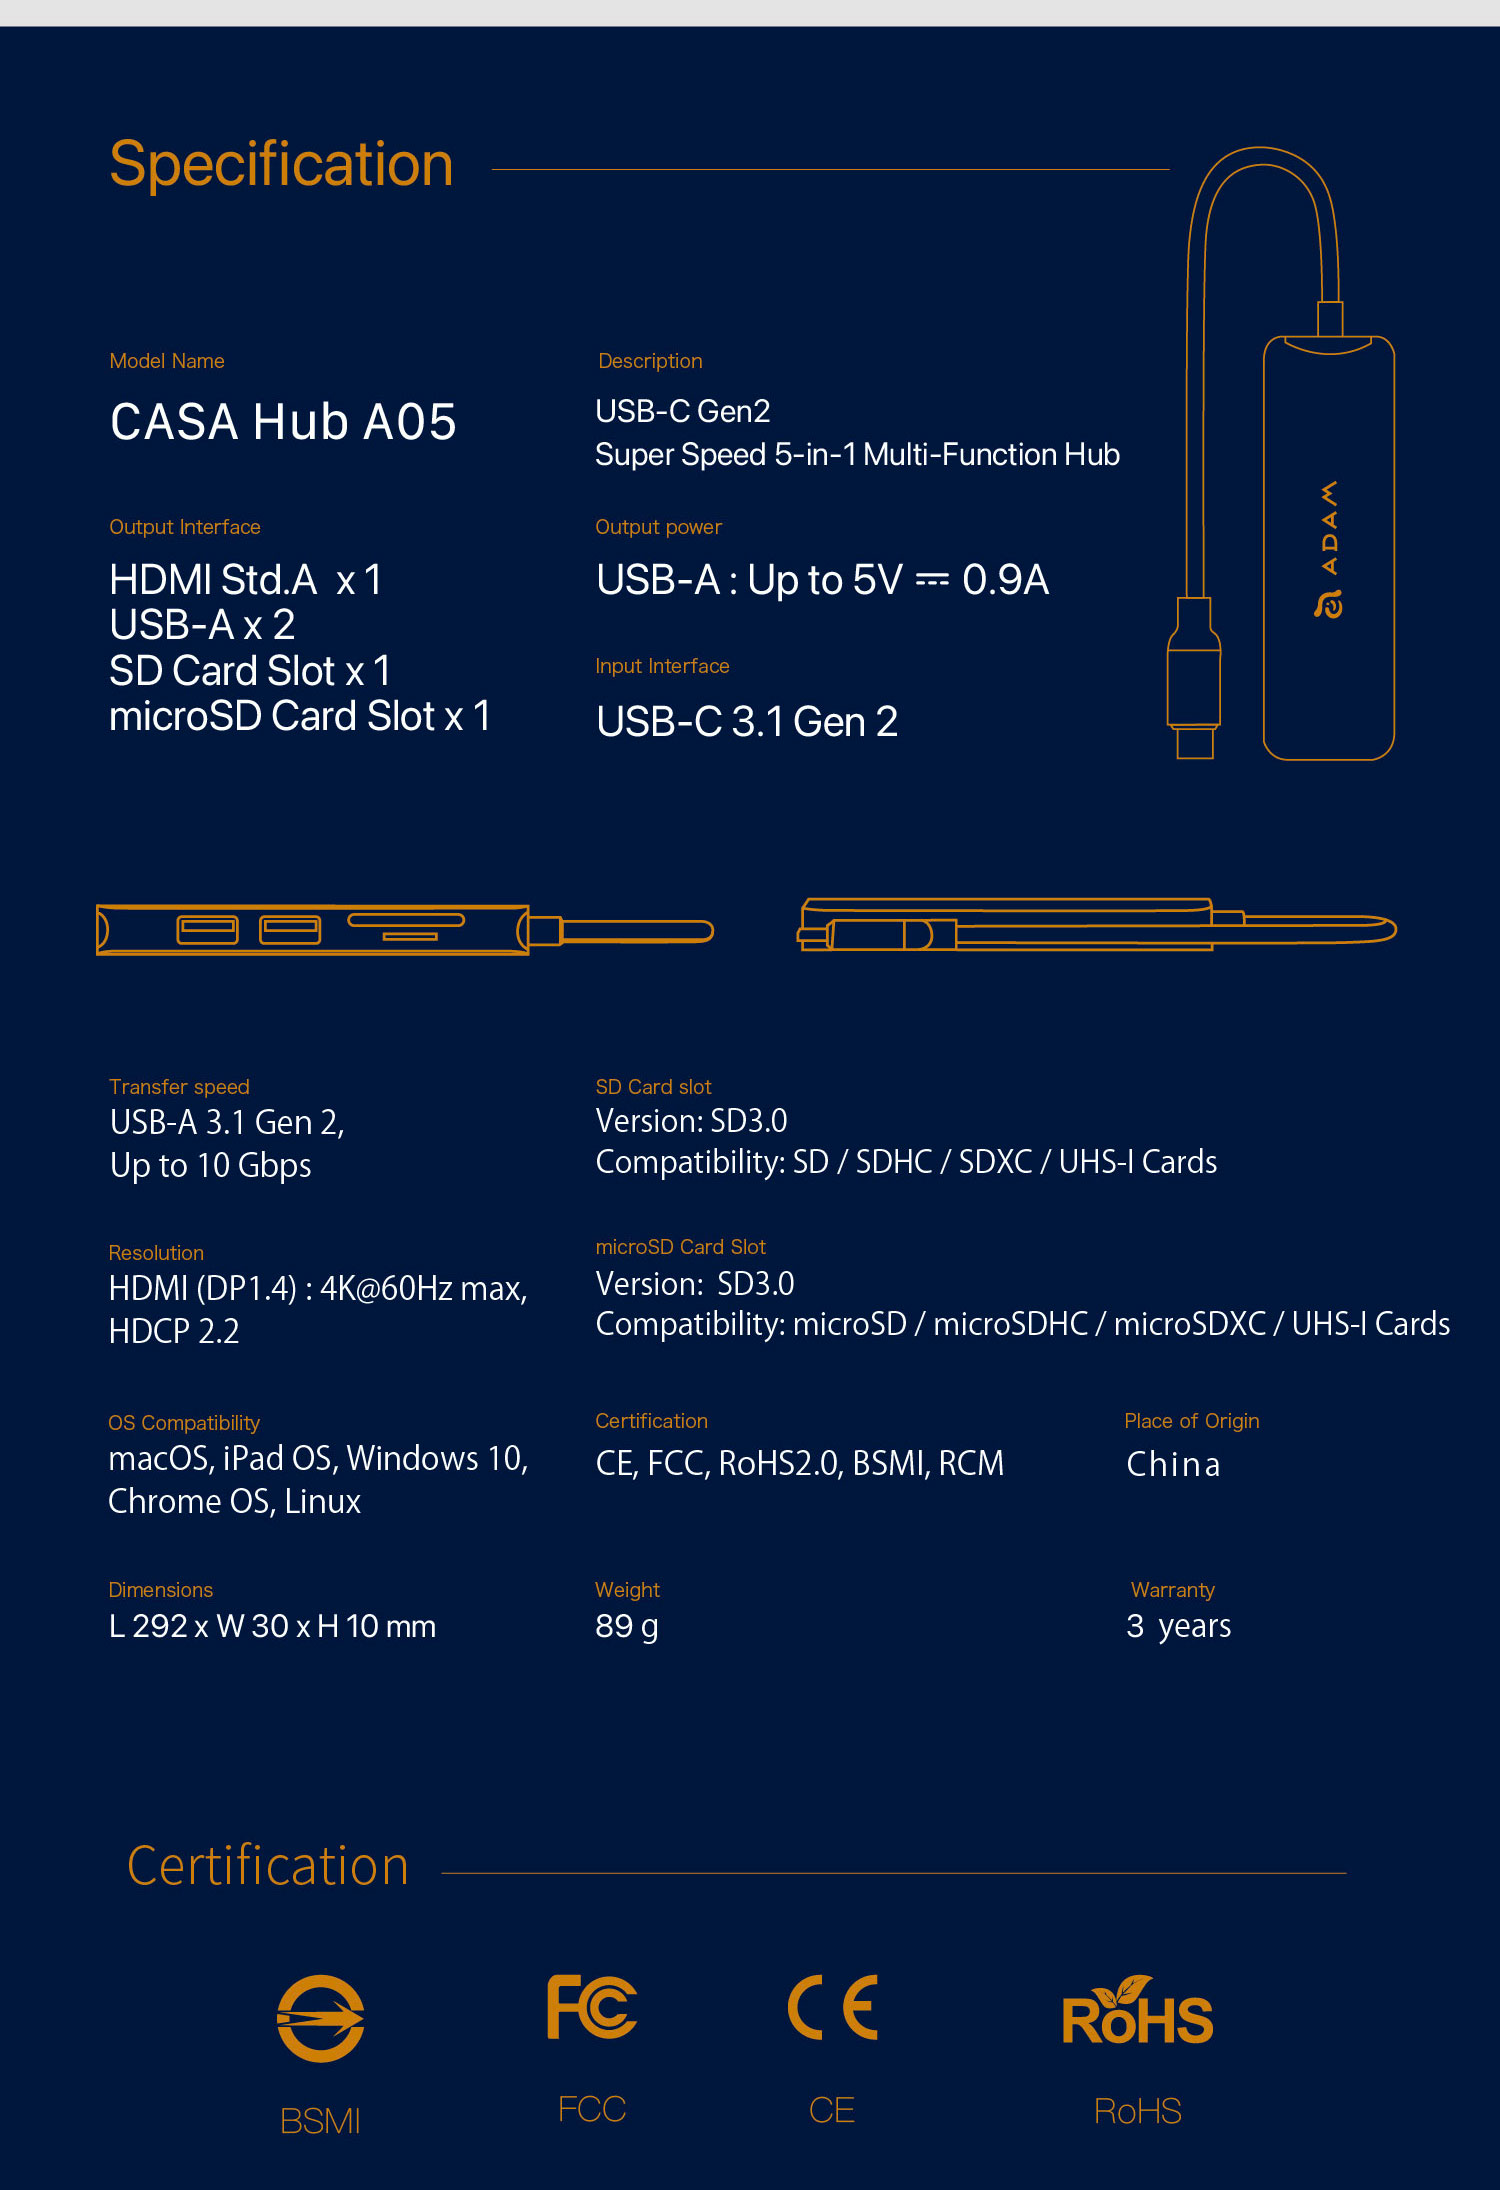 CASA HUB A05 USB C 3.1 Gen 2 5 in 1 Hub 11